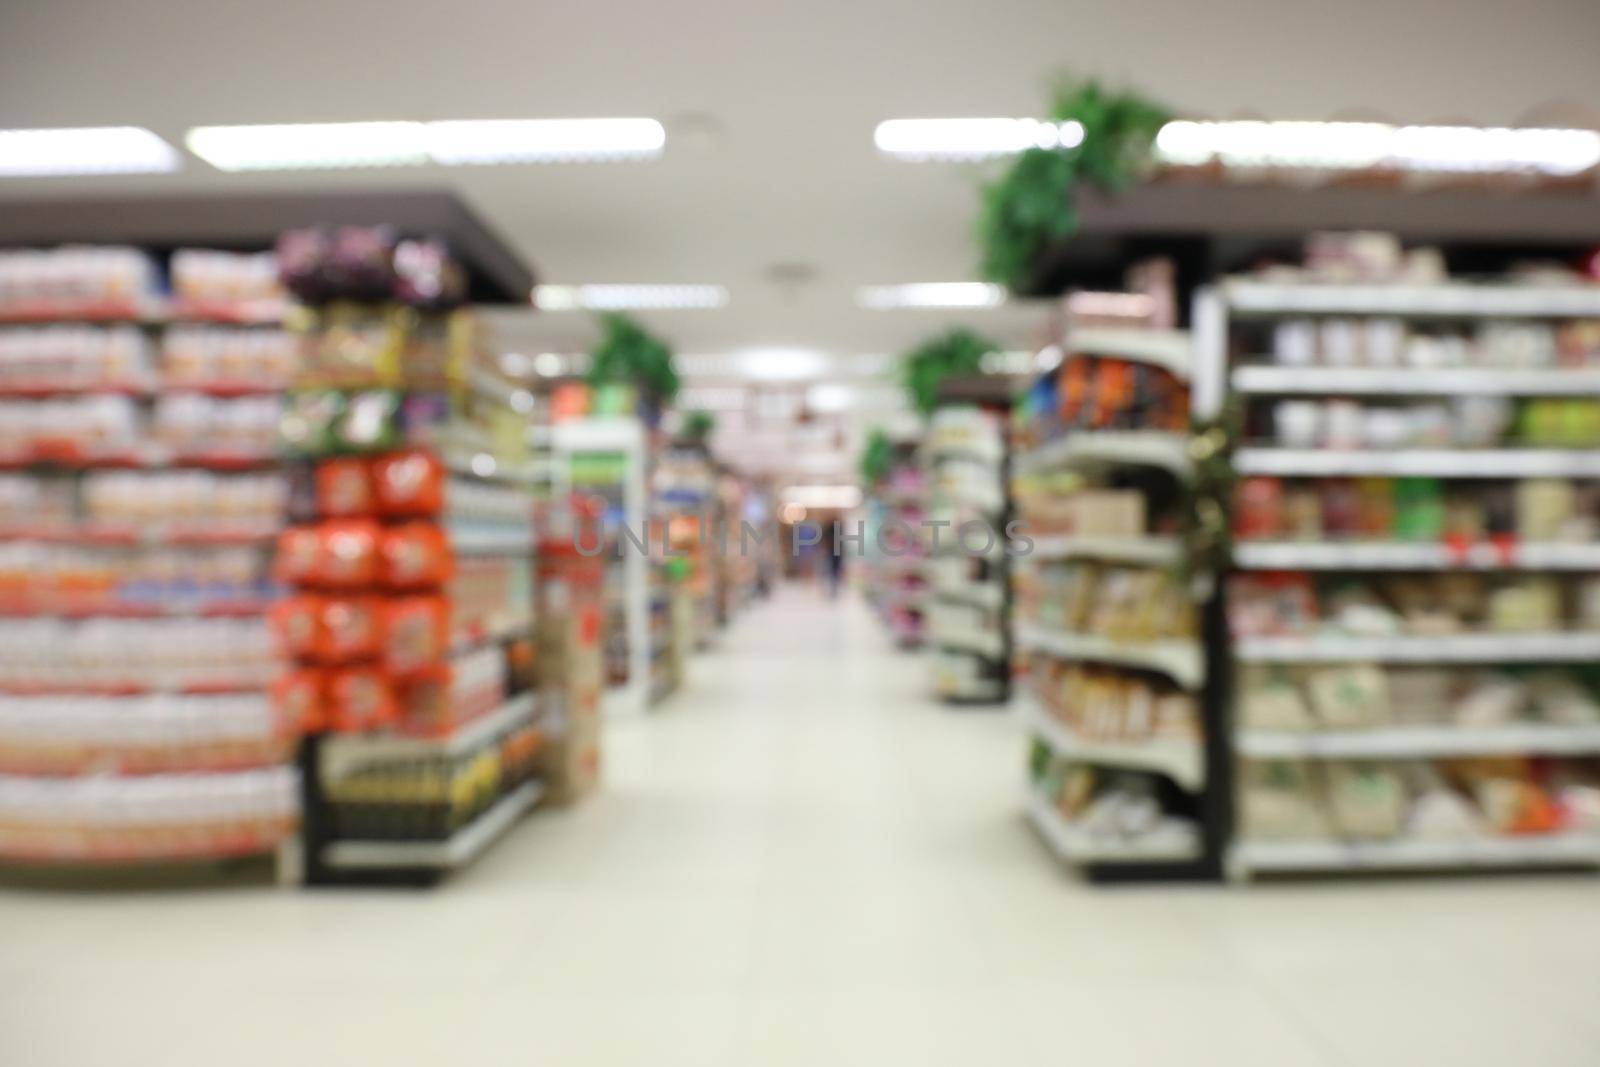 Defocus background blur indoor Store supermarket